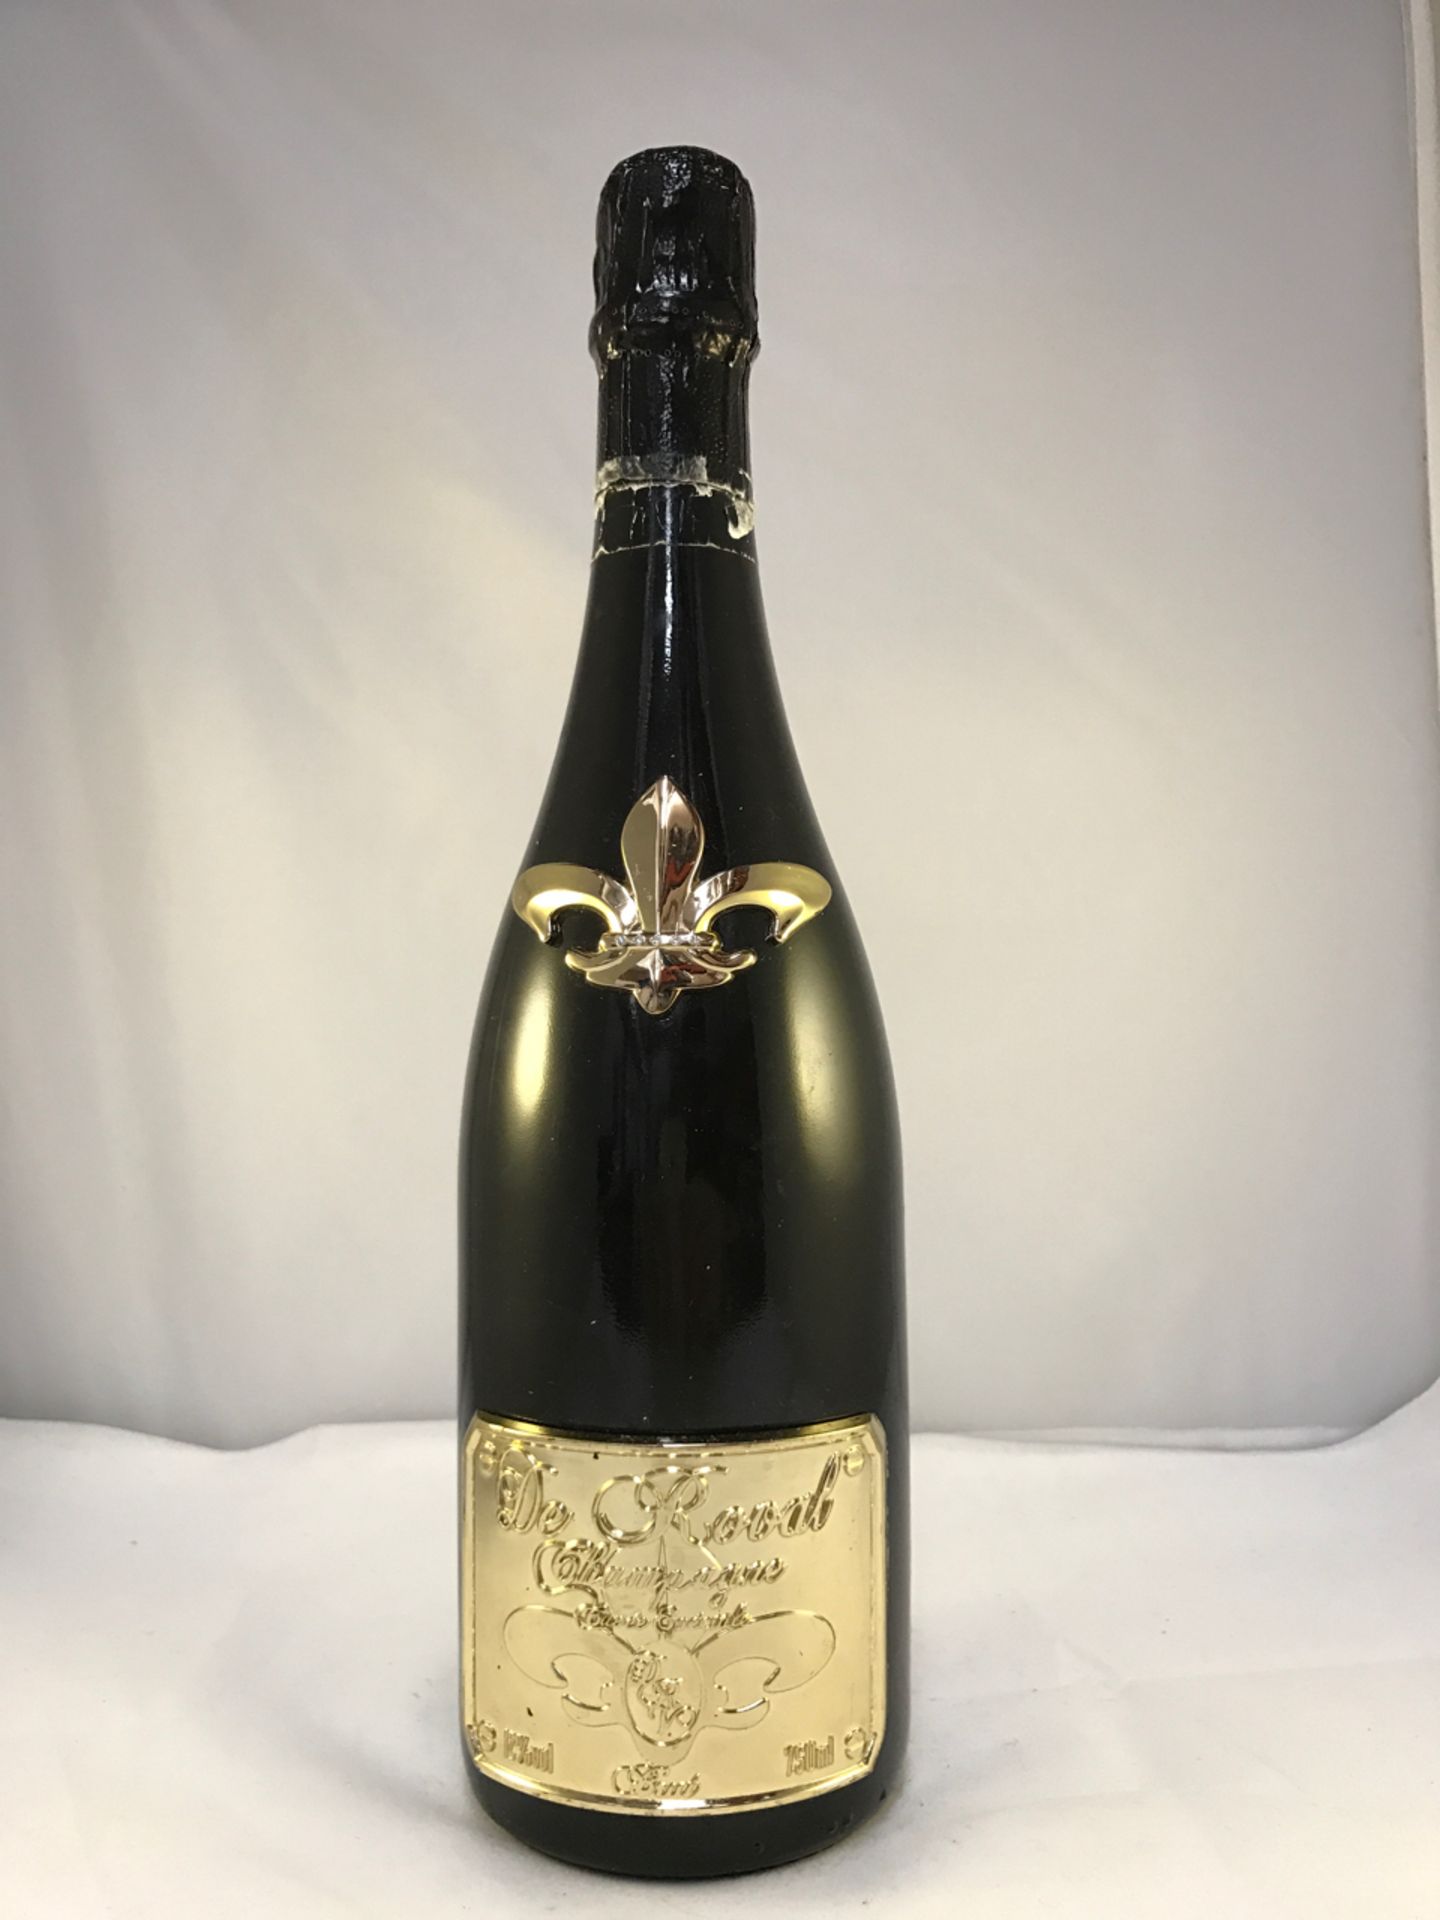 De Roval Champagne Cuvee Speciale Brut 2014 (Gold Label with Diamonds) 750ml Bottle